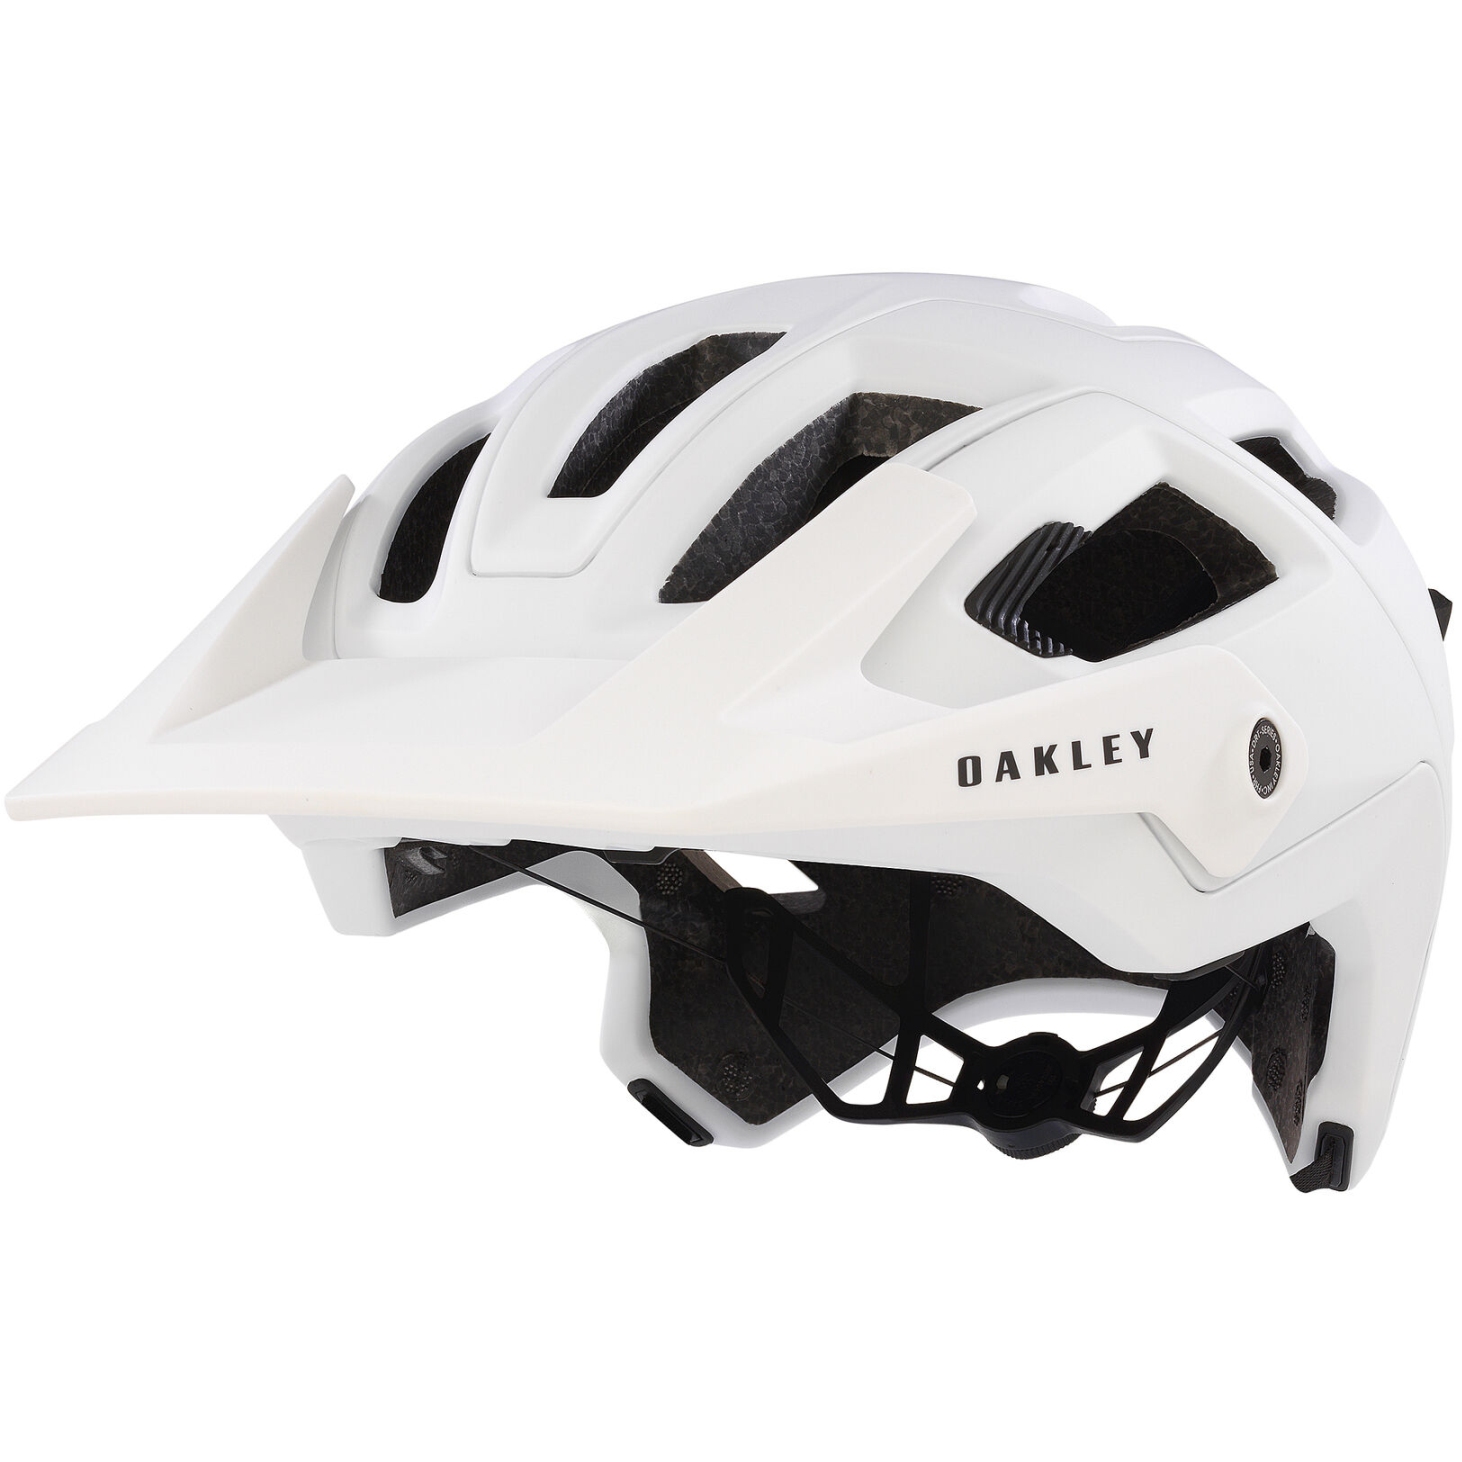 Productfoto van Oakley DRT5 Maven MIPS Helm - White